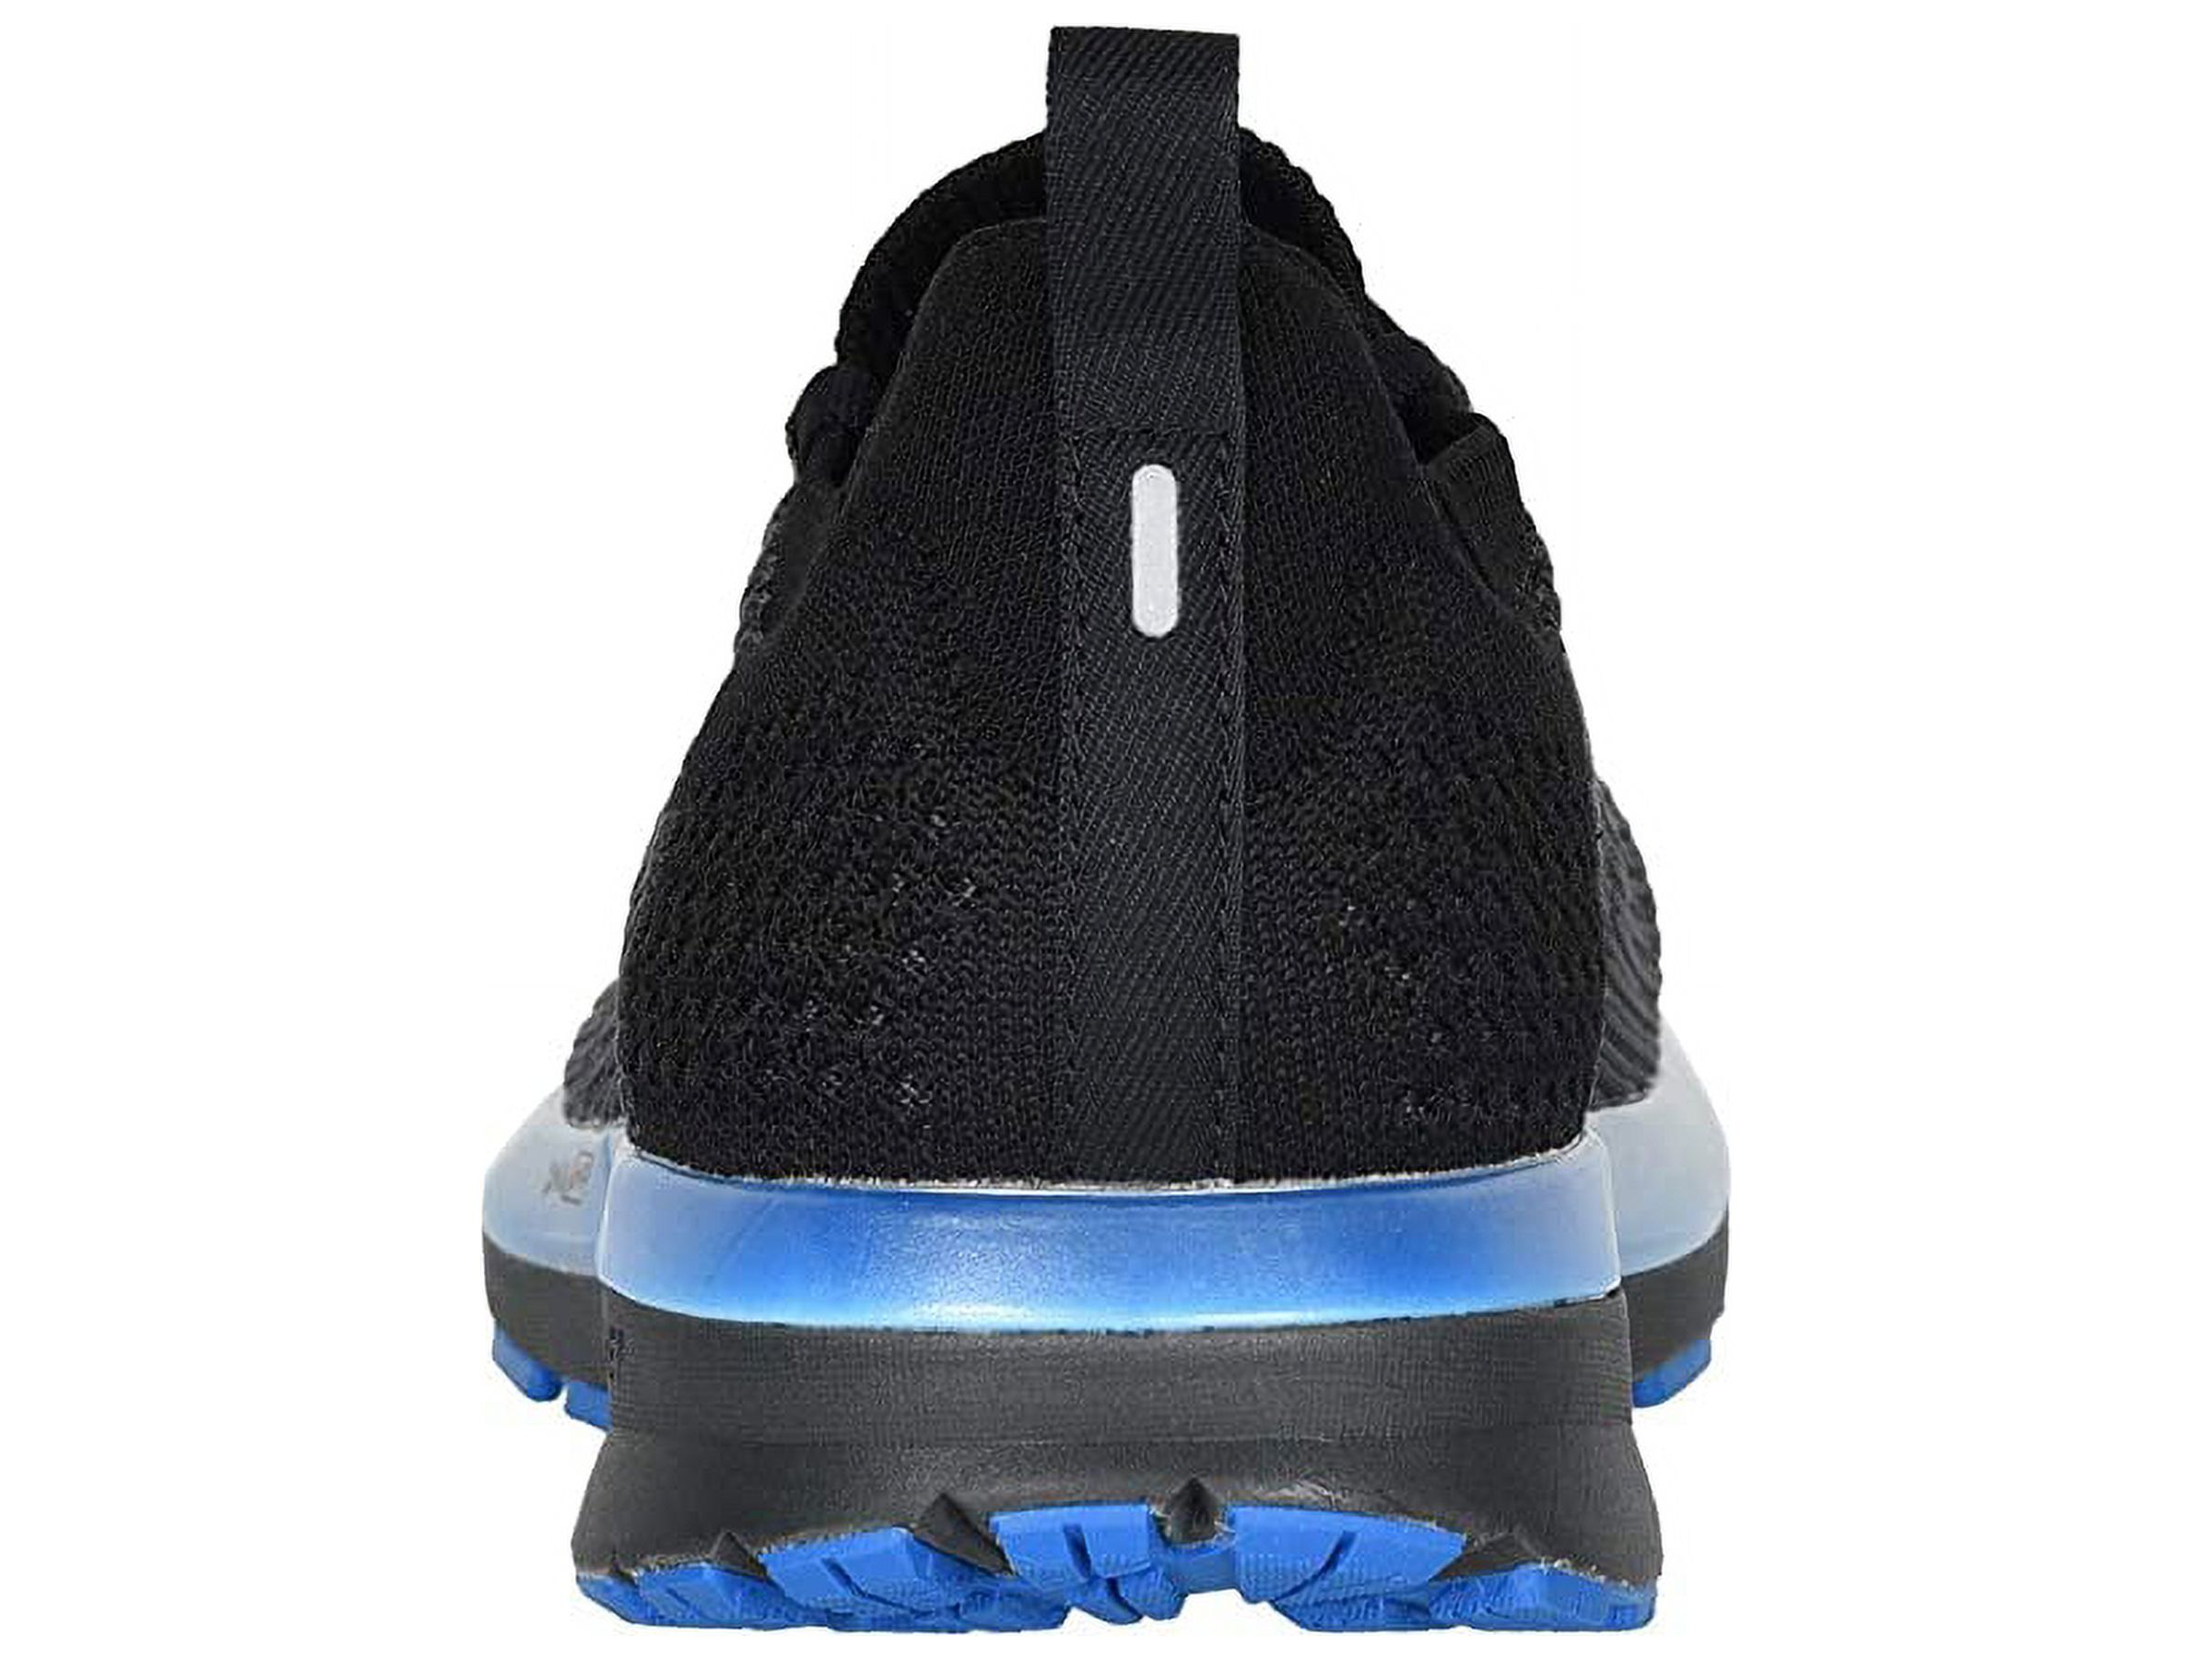 Brooks Men's Ricochet 2 Running Shoe, Black/Multi, 10.5 D(M) US - image 5 of 6